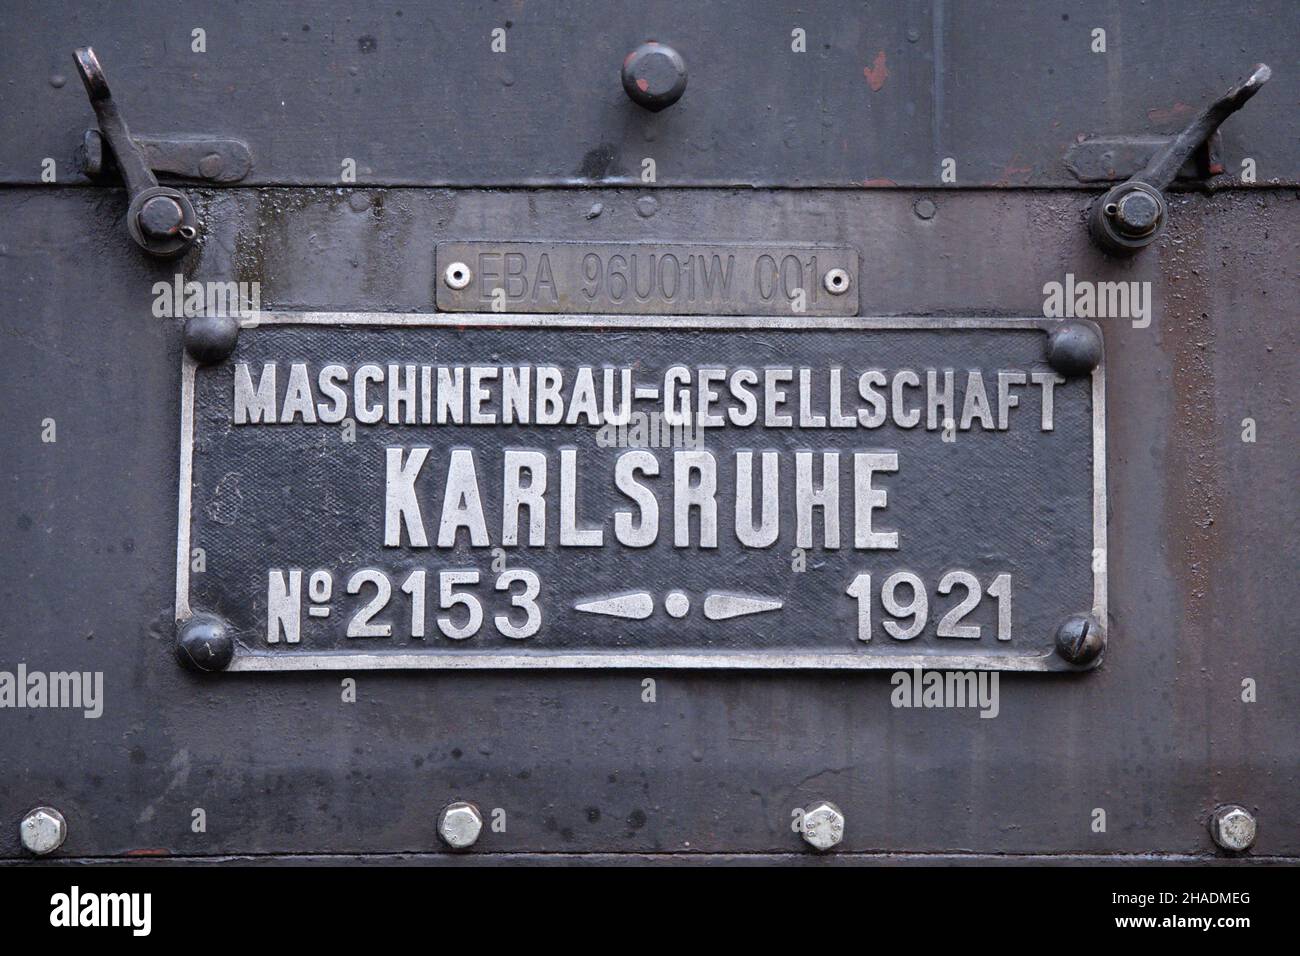 Maschinenbau-Gesellschaft Karlsruhe 1921, Placa Locomotive Foto de stock